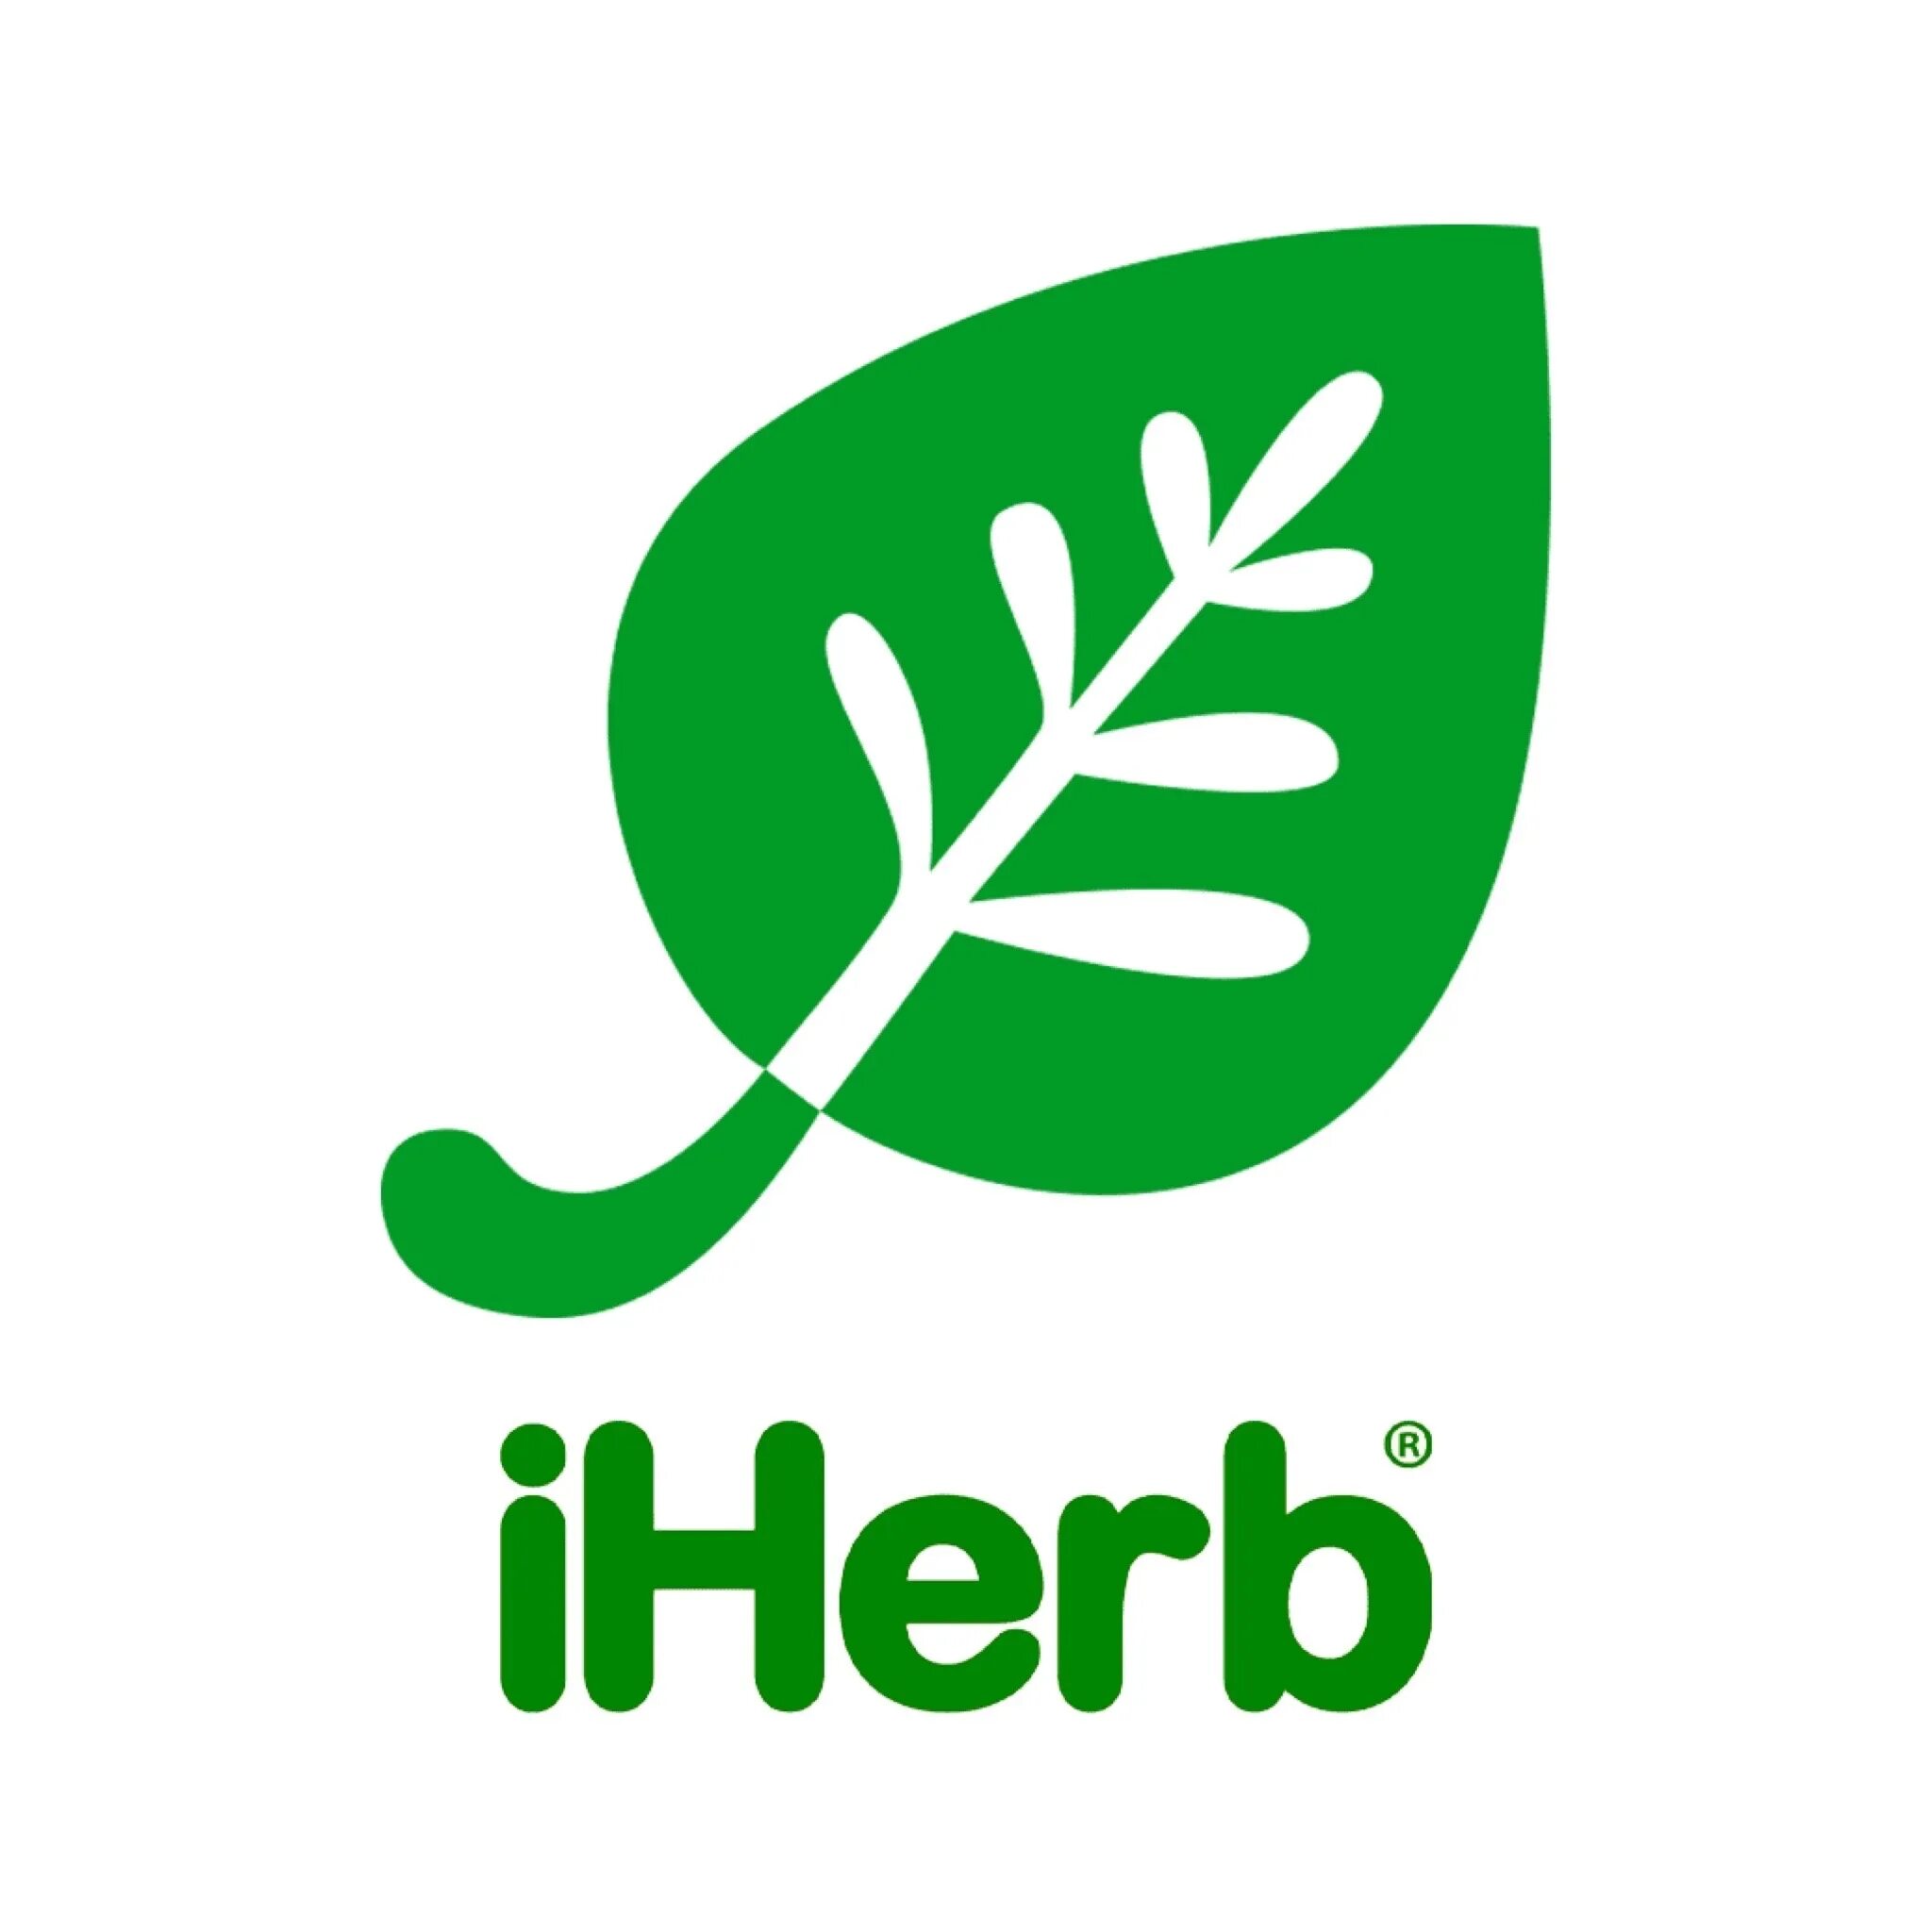 Https ru iherb com. IHERB логотип. Фон айхерб. IHERB логотип без фона. IHERB логотип на белом фоне.